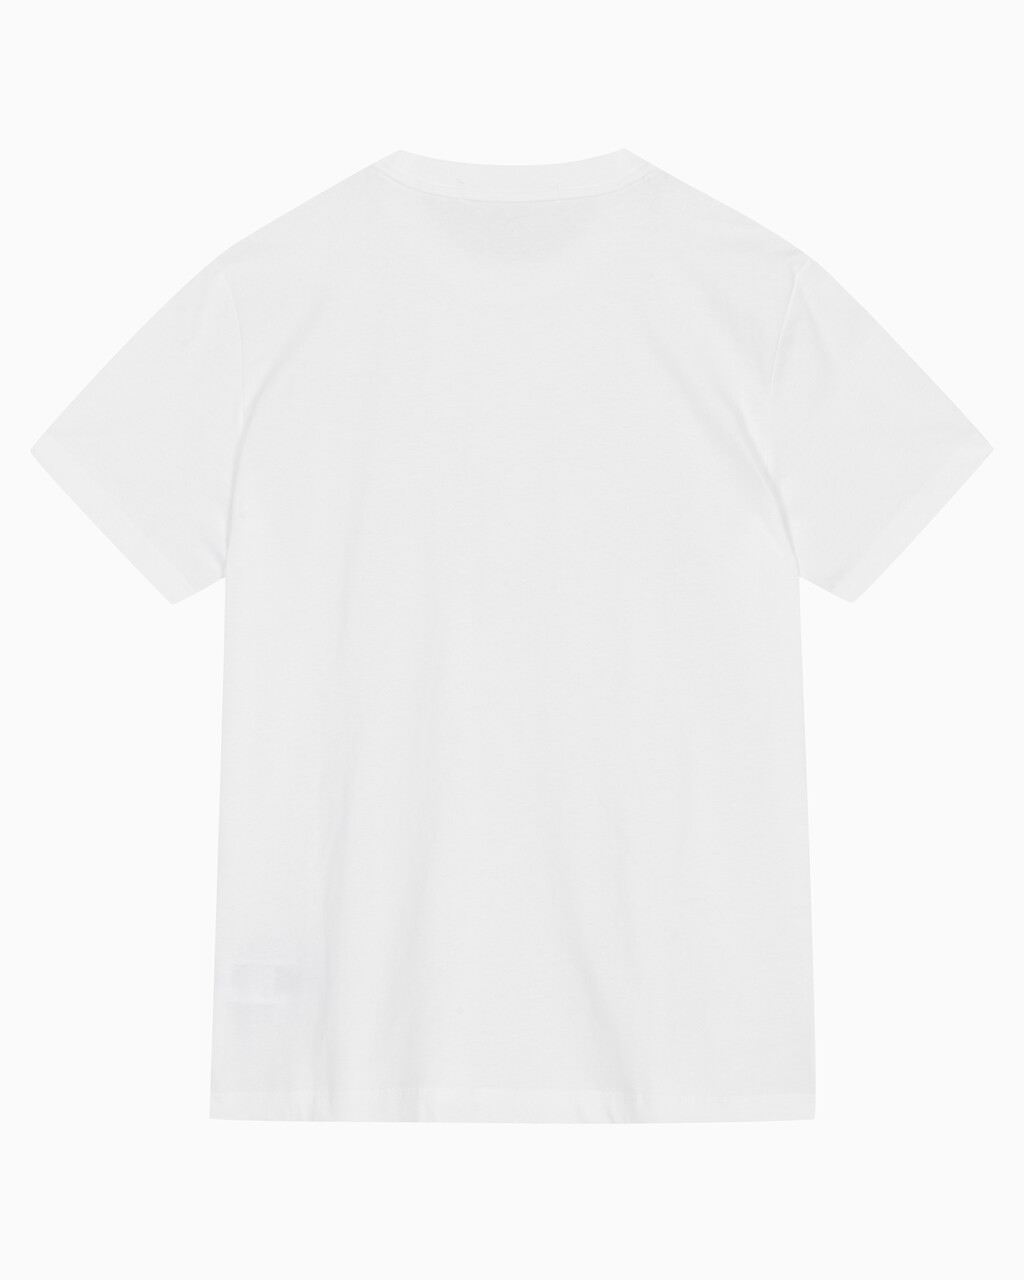 Buy 남성 레귤러핏 CK 로고 뱃지 반팔 티셔츠 in color BRIGHT WHITE